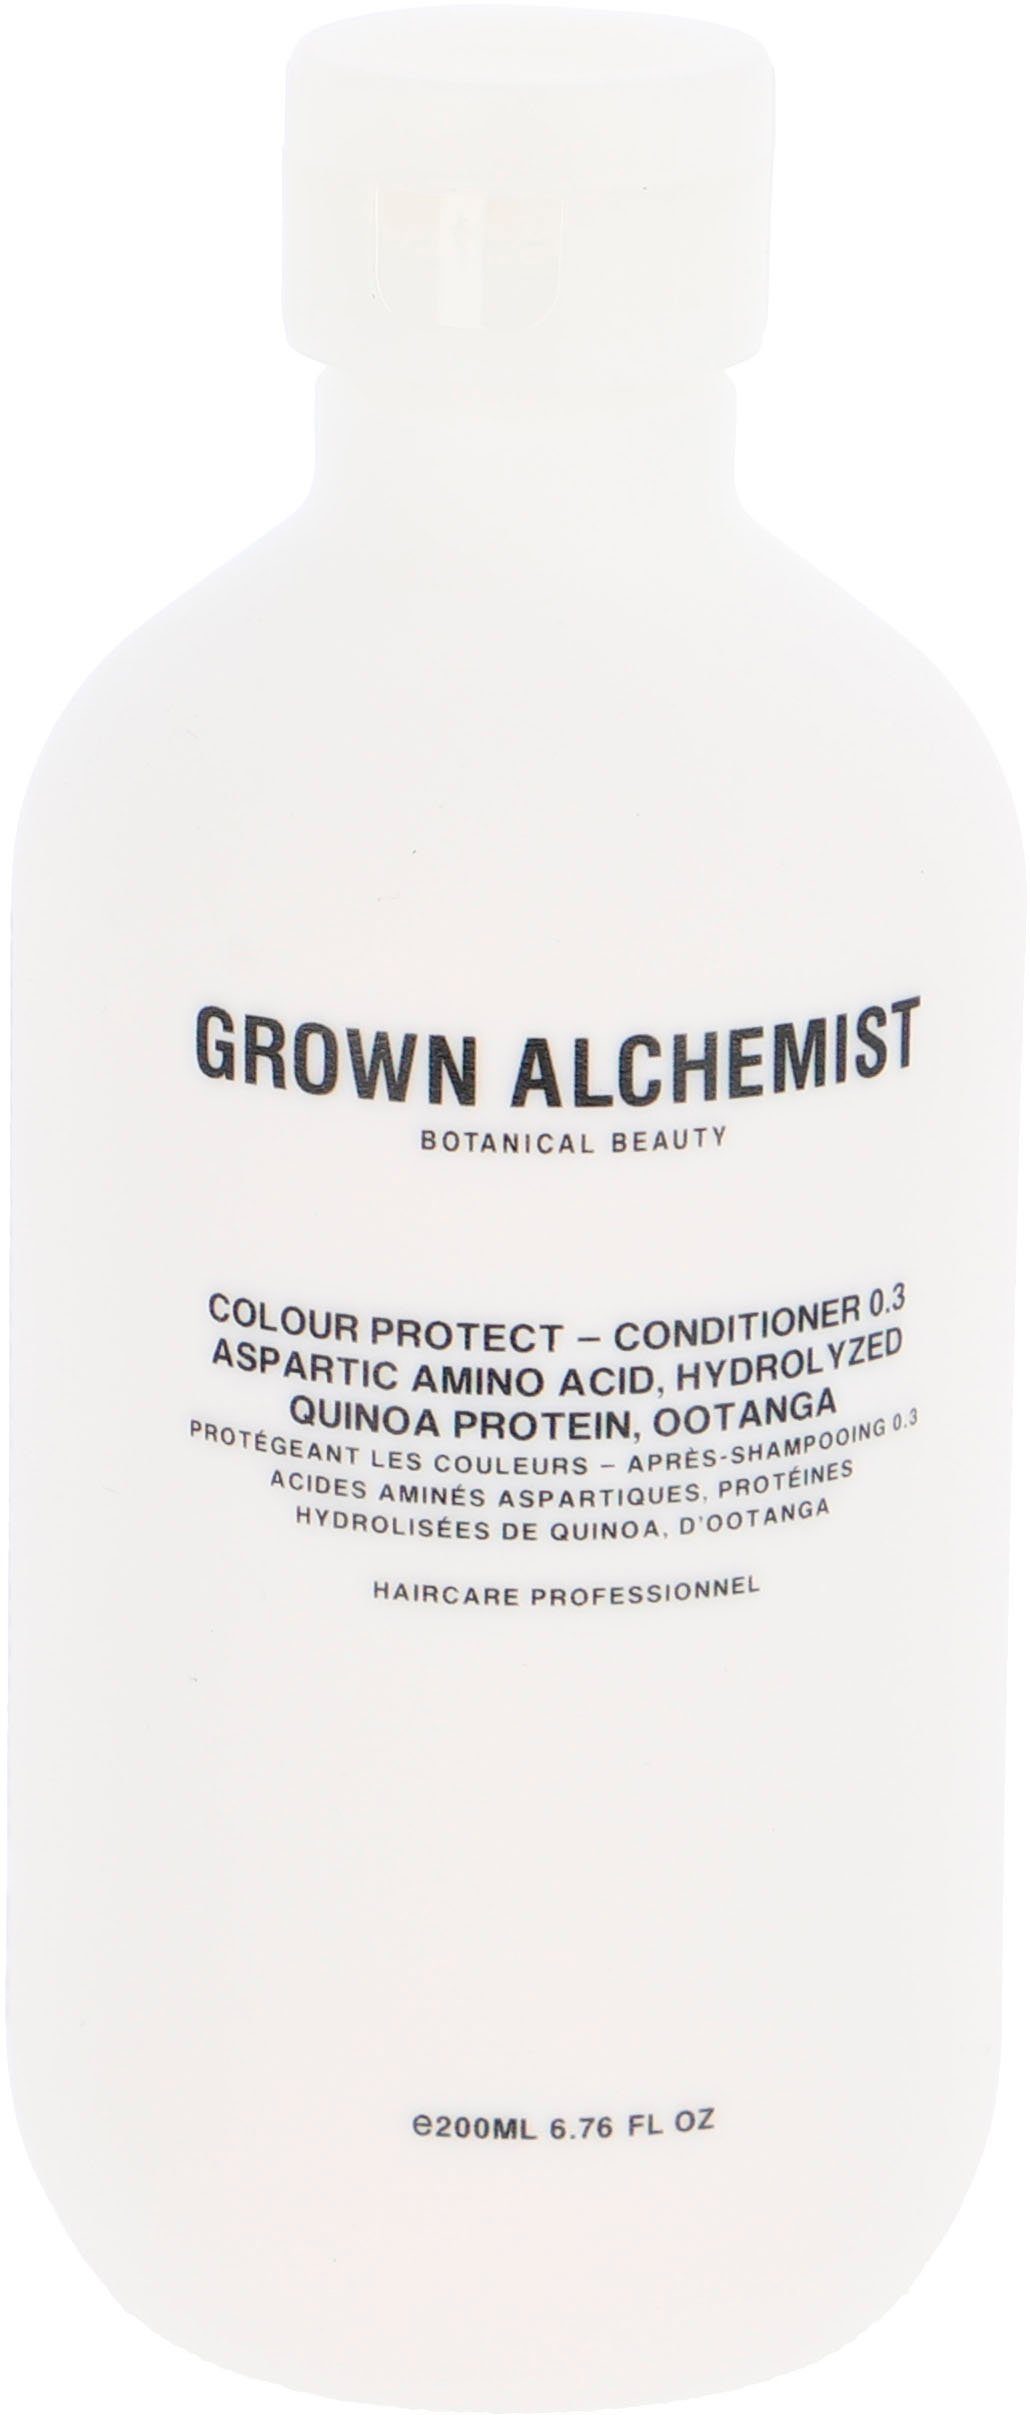 GROWN ALCHEMIST Haarspülung Colour Protect Aspartic Hydrolyzed Protein, 0.3, Ootanga Conditioner Acid, - Amino Quinoa